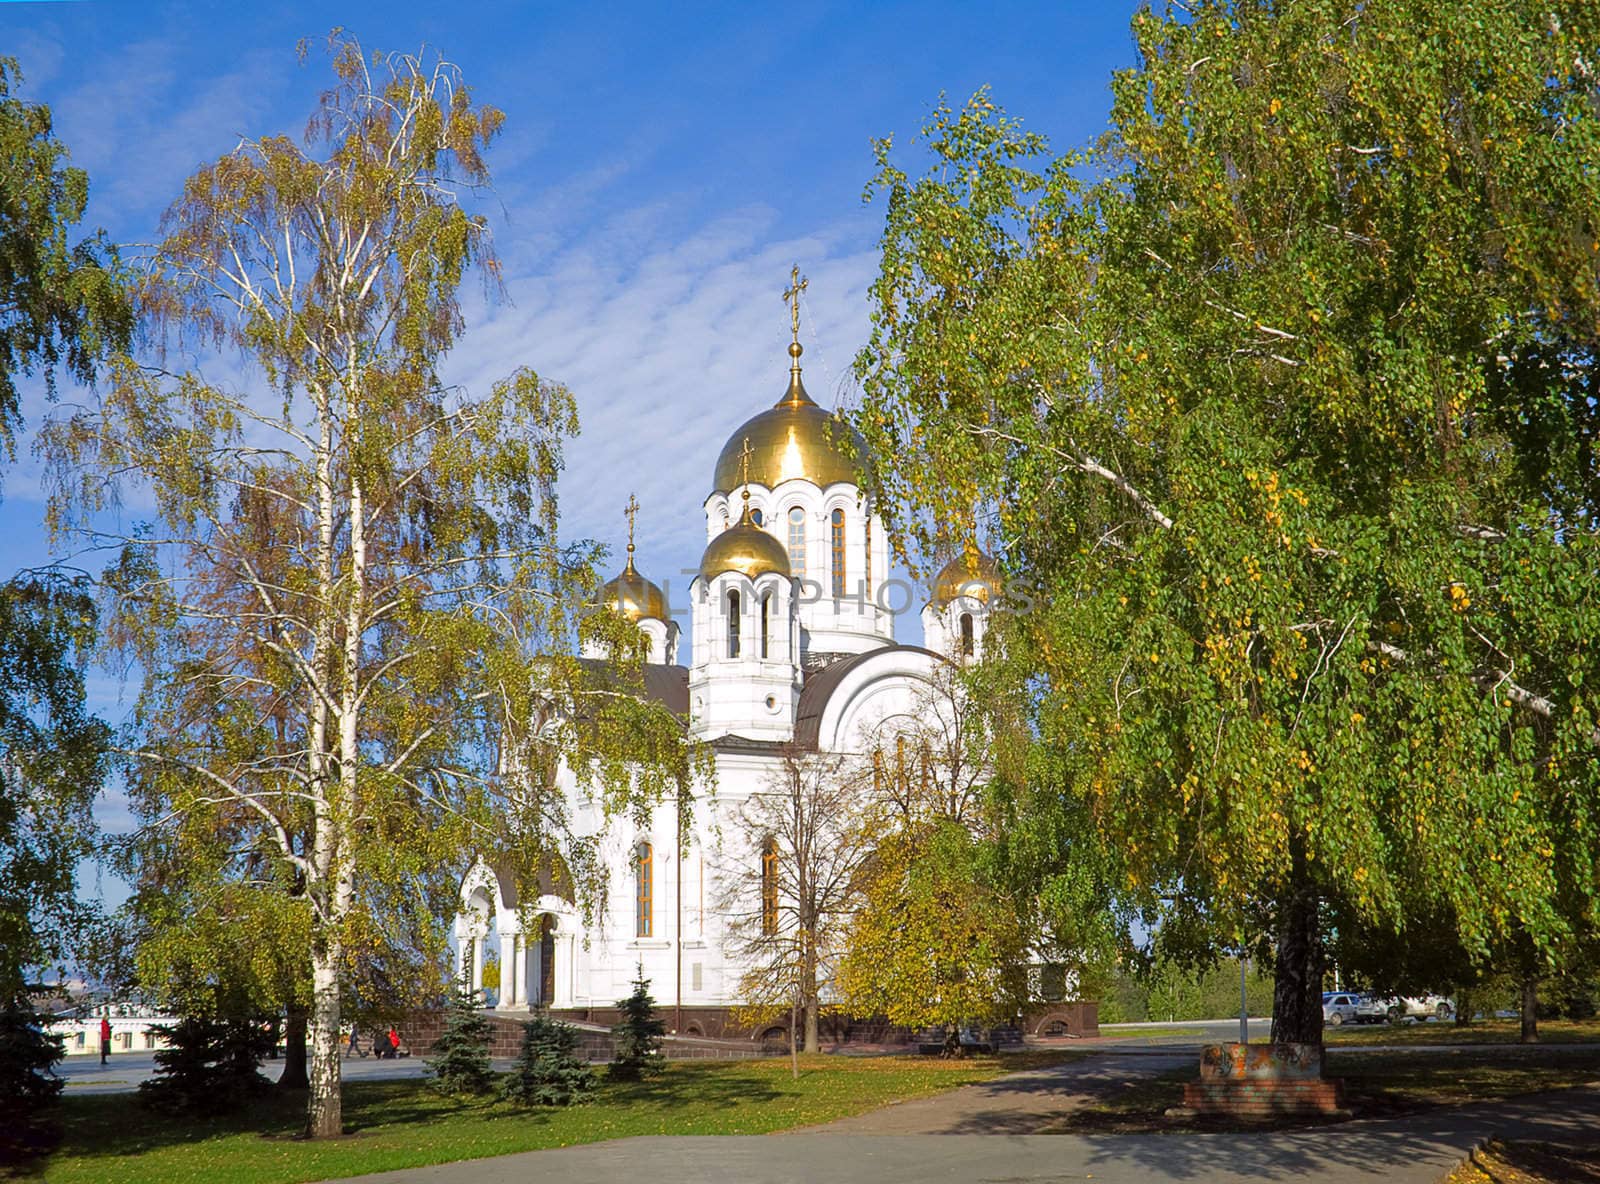 Fine orthodox church by Kriblikrabli